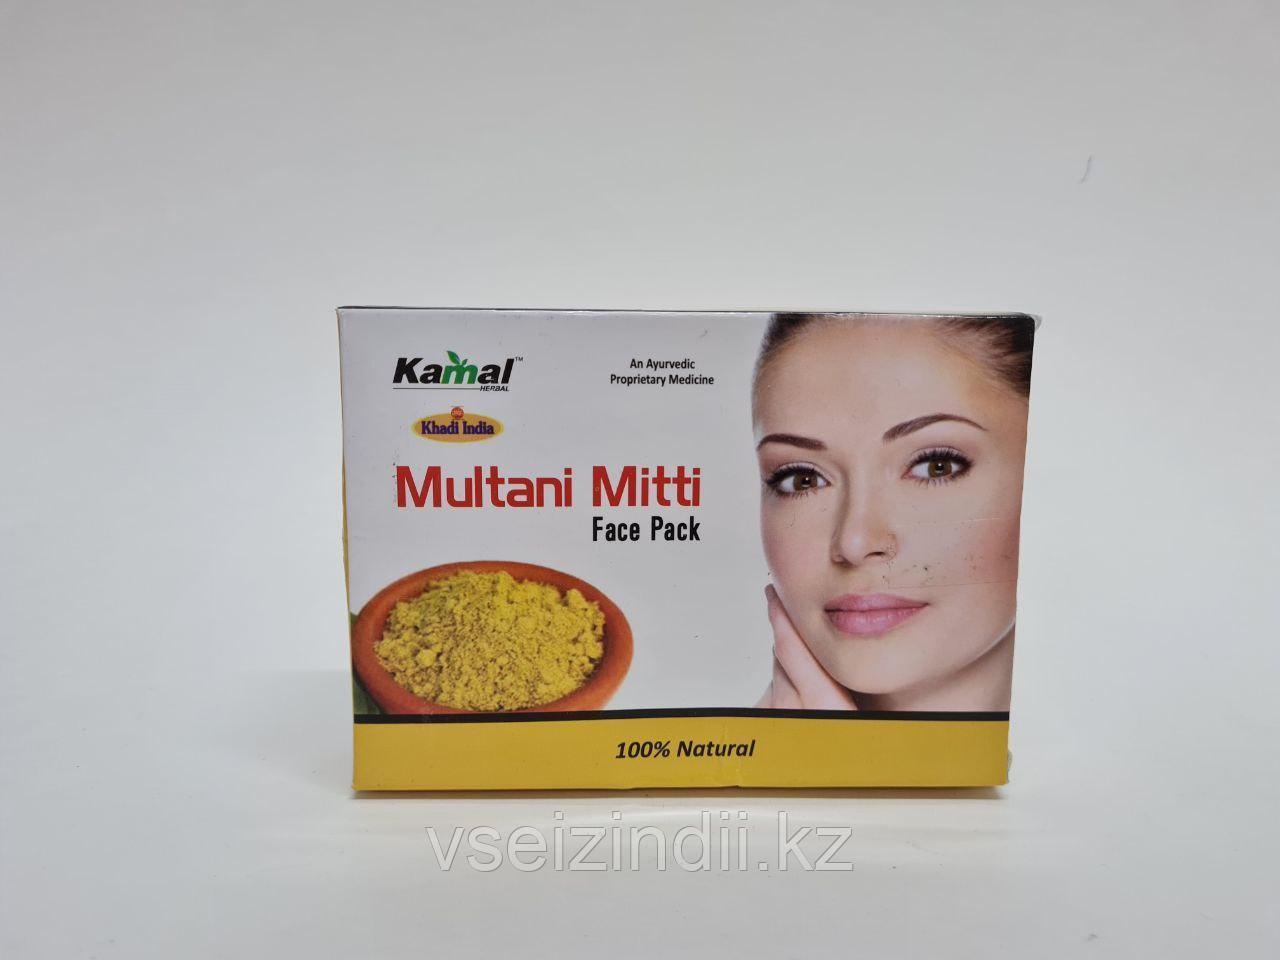 Маска для лица Мултани митти Кхади Индия, 100 грамм